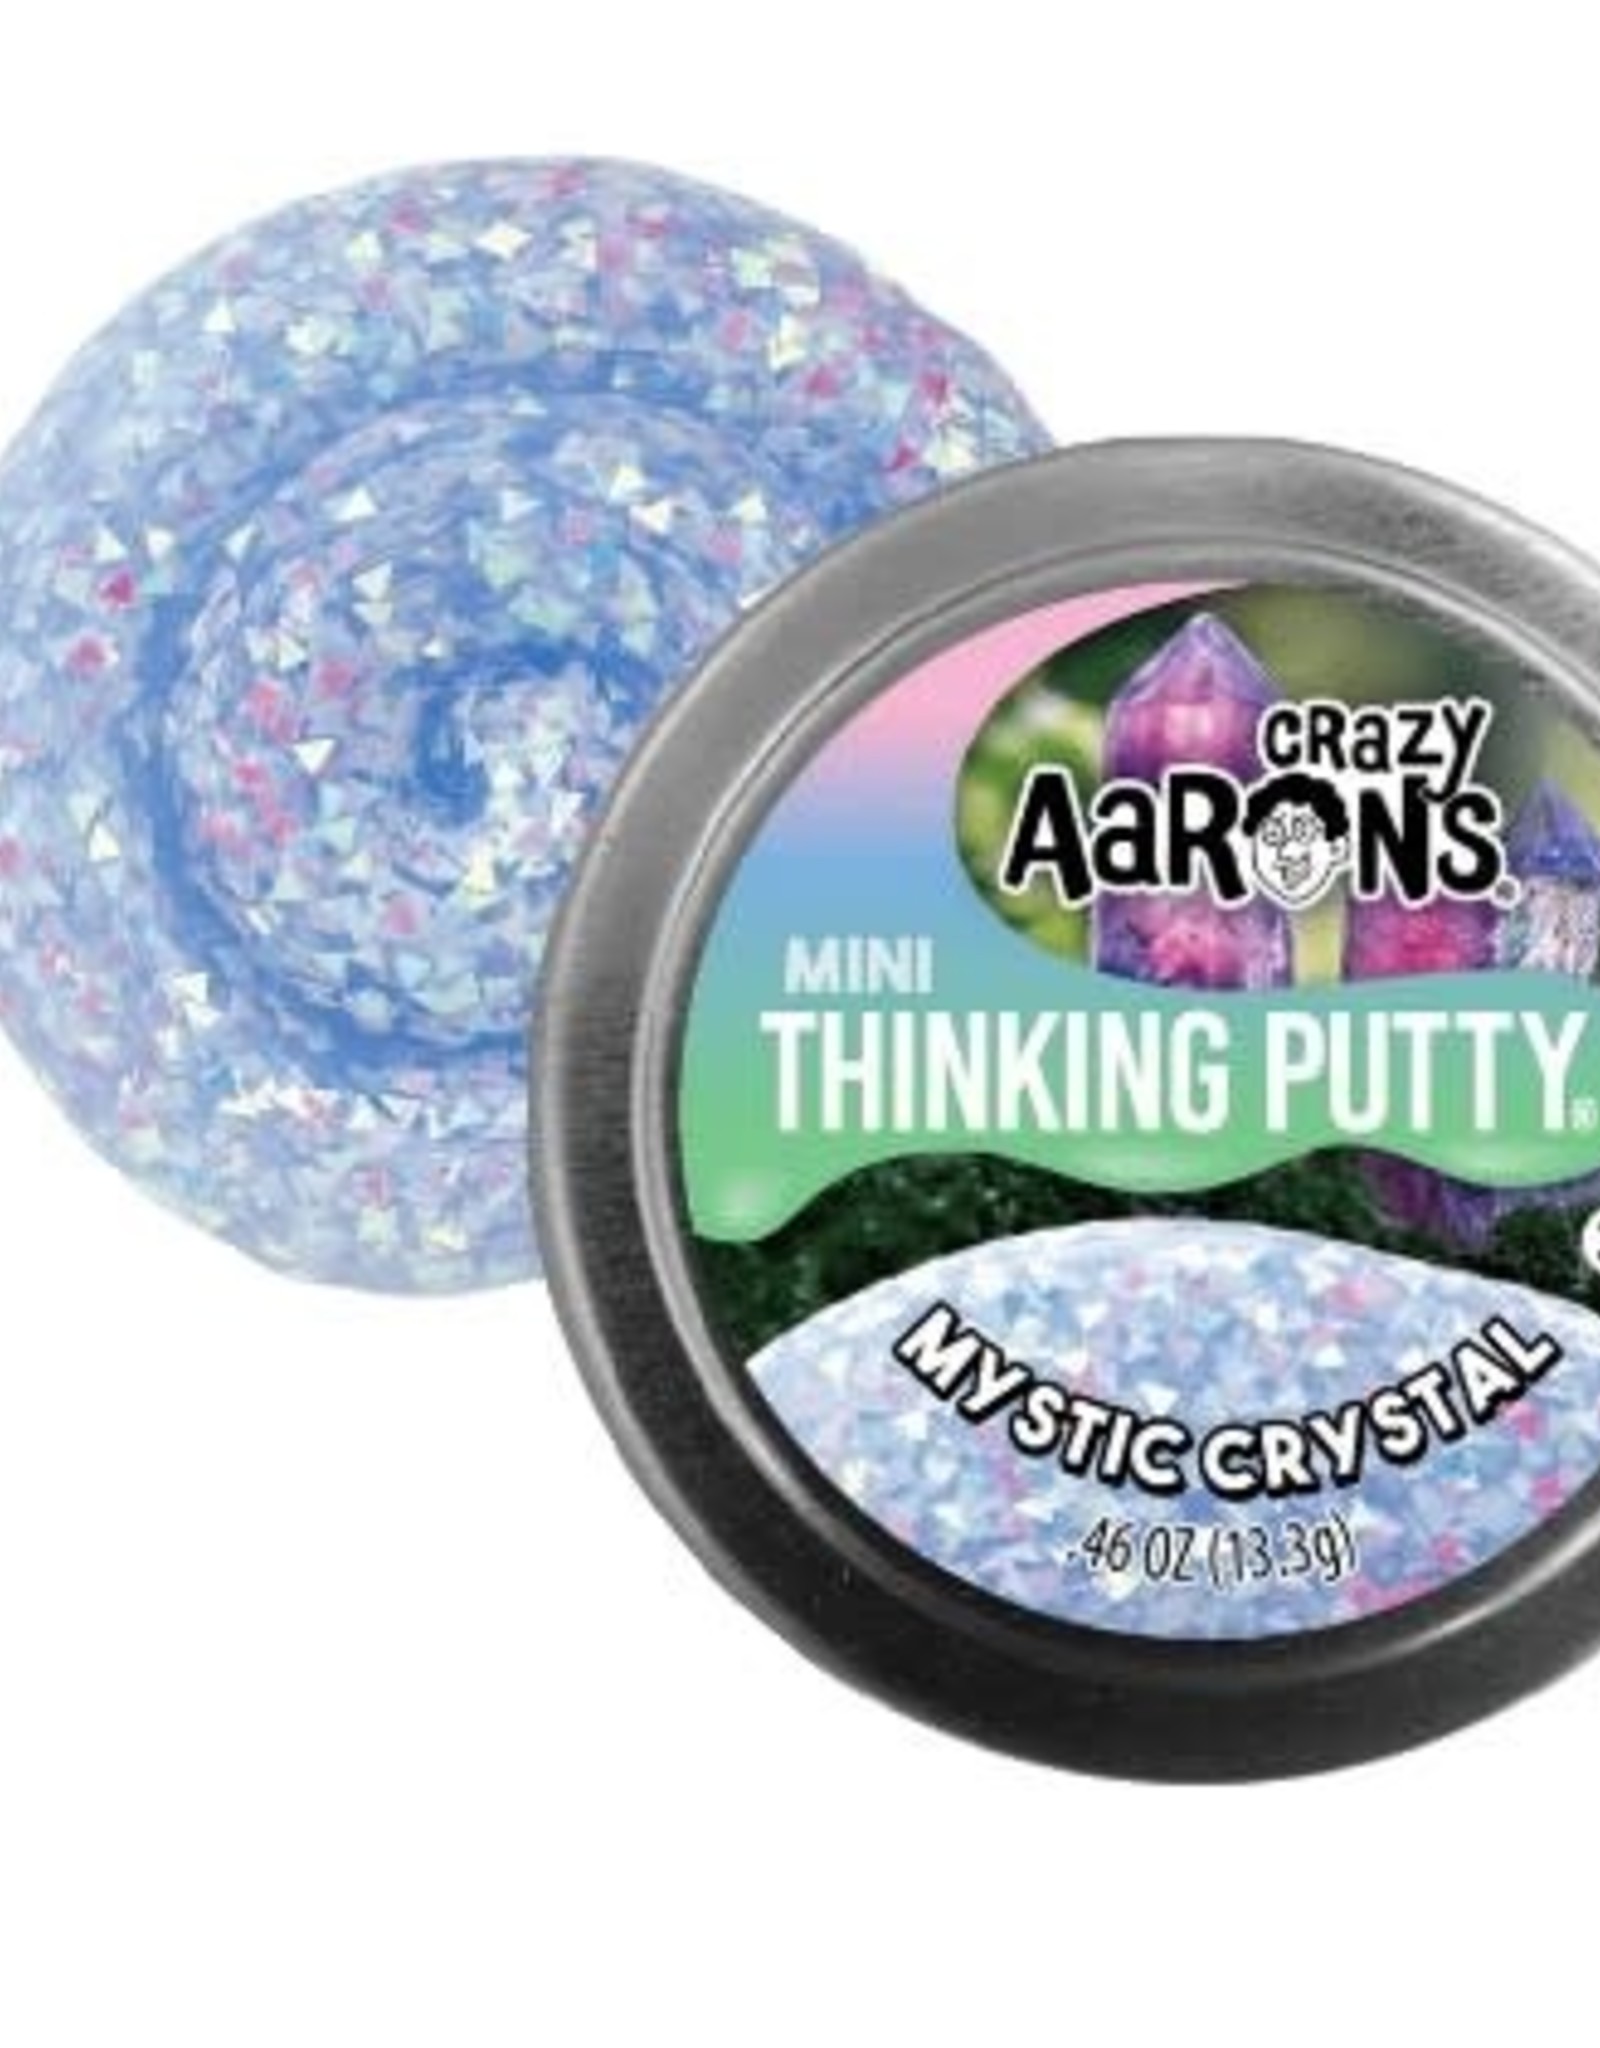 Crazy Aaron's Thinking Putty Crazy Aaron's 2" Mini Tin - Mystic Crystal